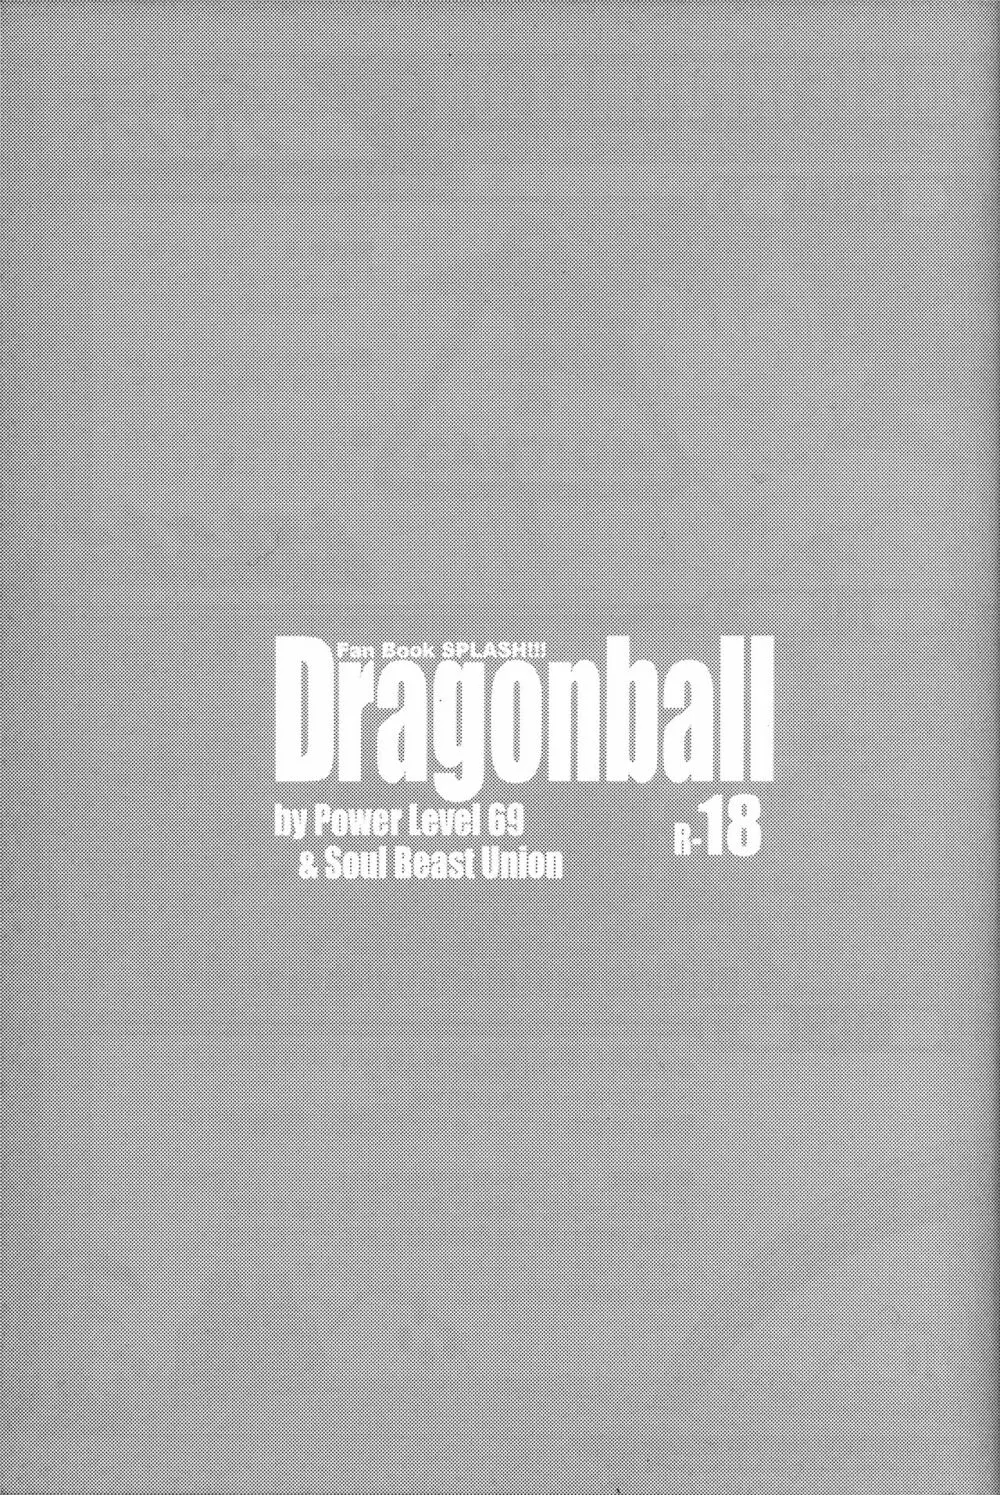 Dragonball Fan Book SPLASH!!! - page4